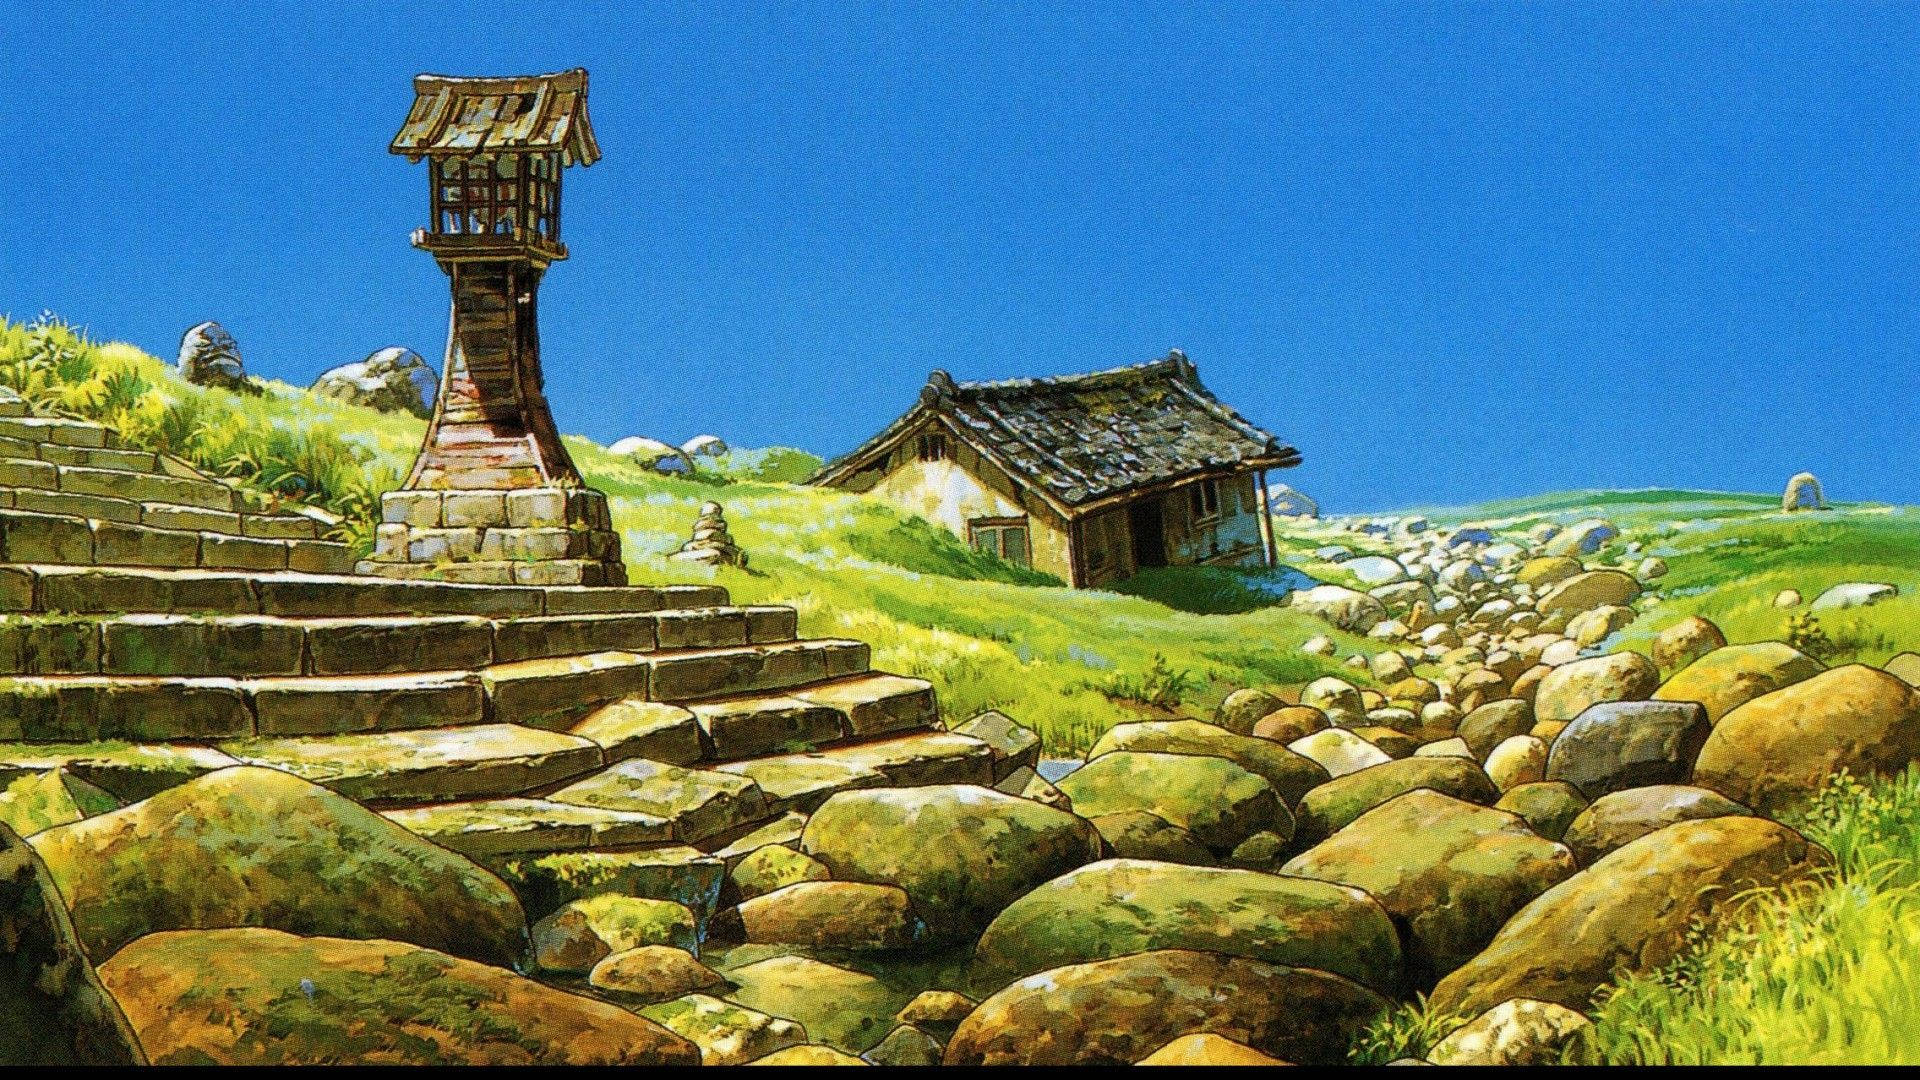 Studio Ghibli Animation Scenery Background